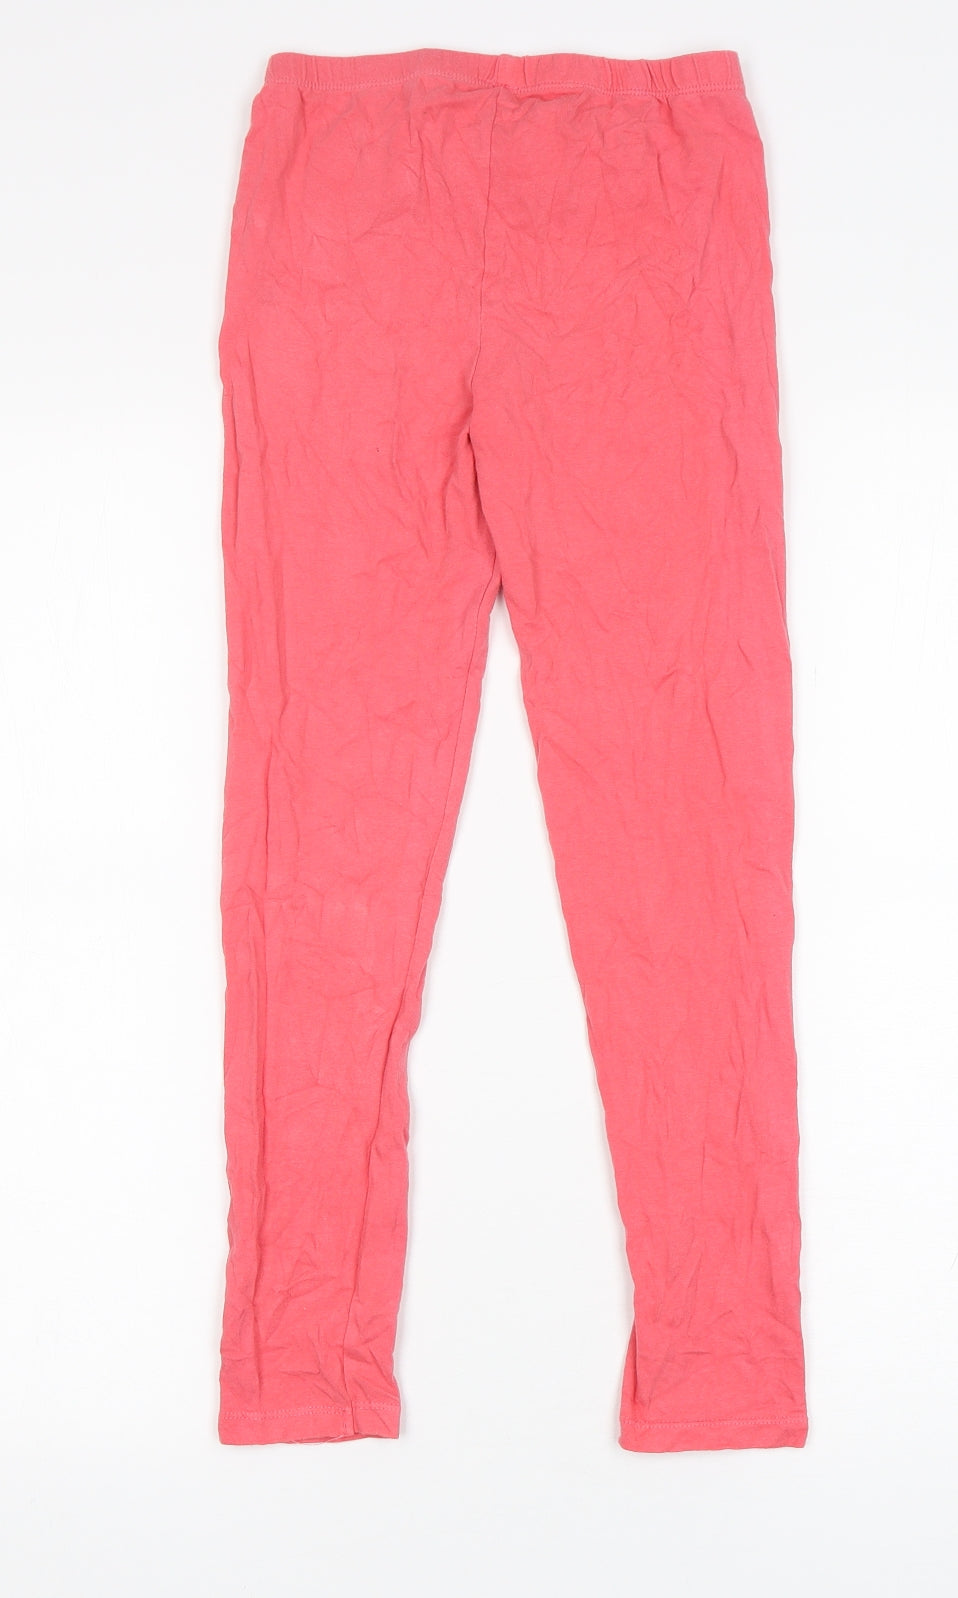 TU Girls Pink  Cotton Sweatpants Trousers Size 11 Years  Regular  - Leggings